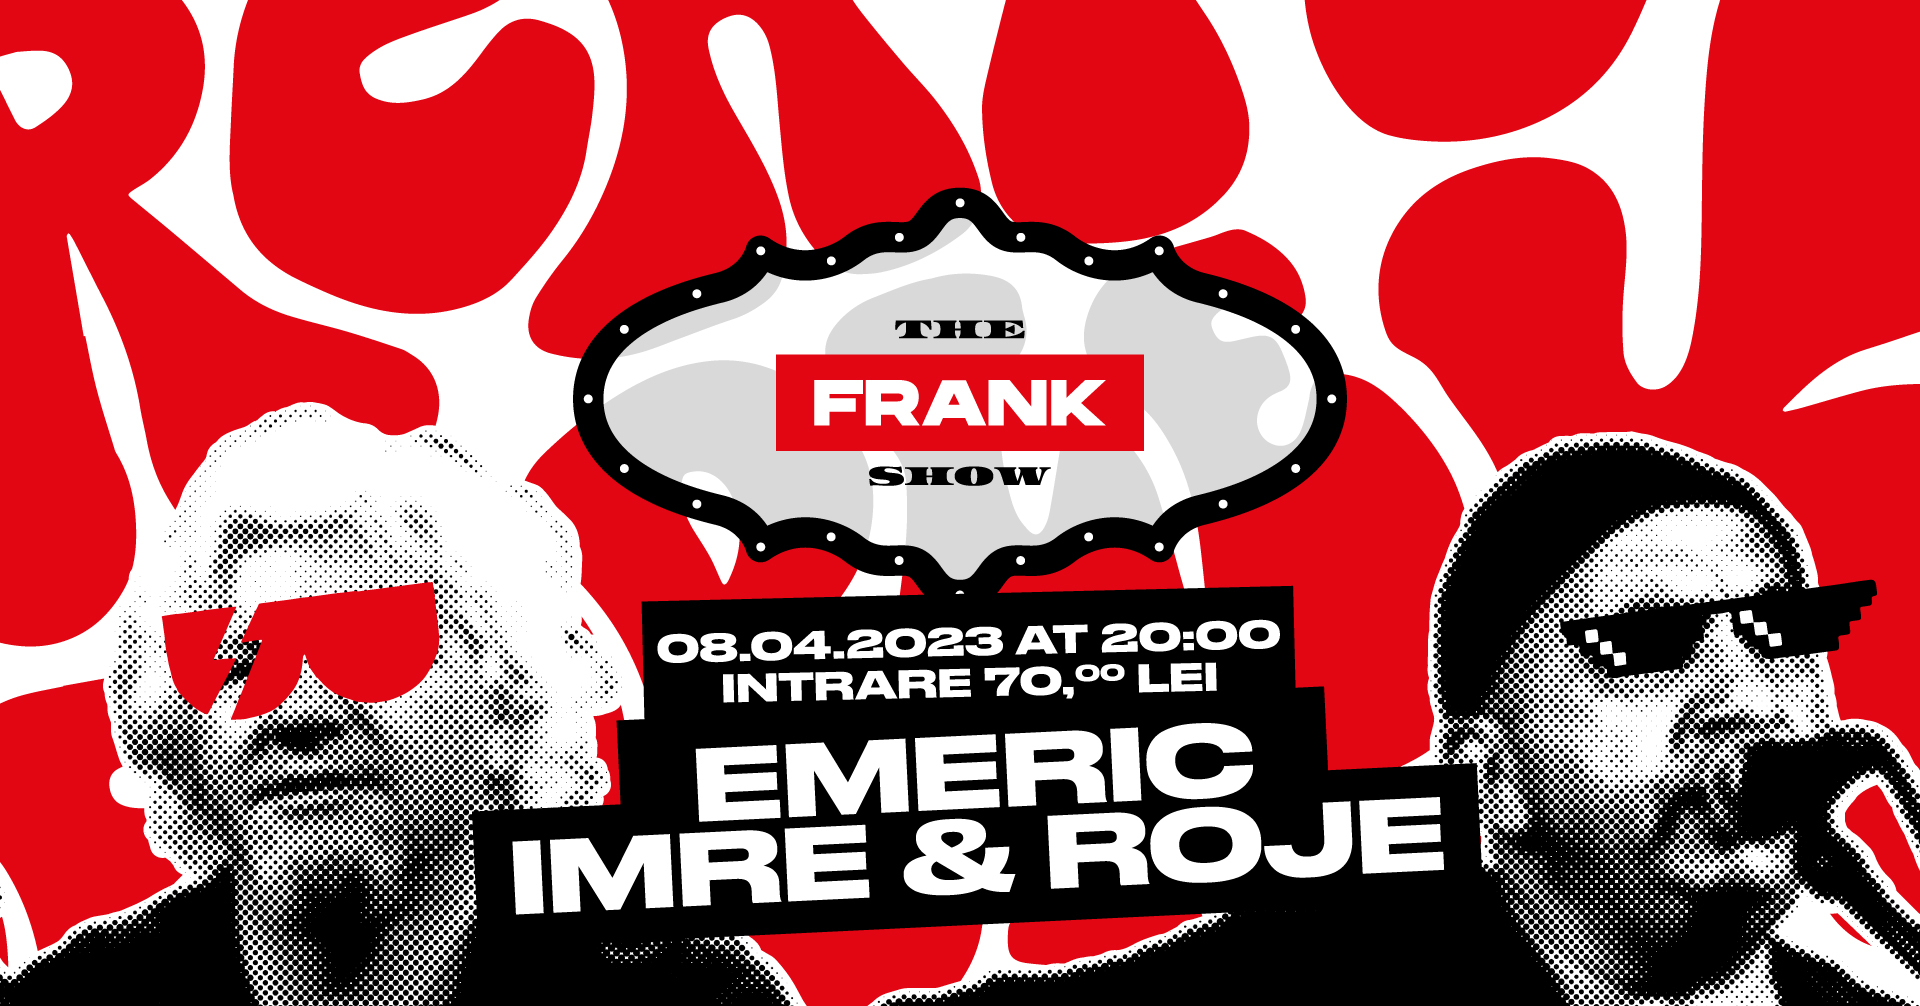 The FRANK Show: Concert Emeric Imre & Roje